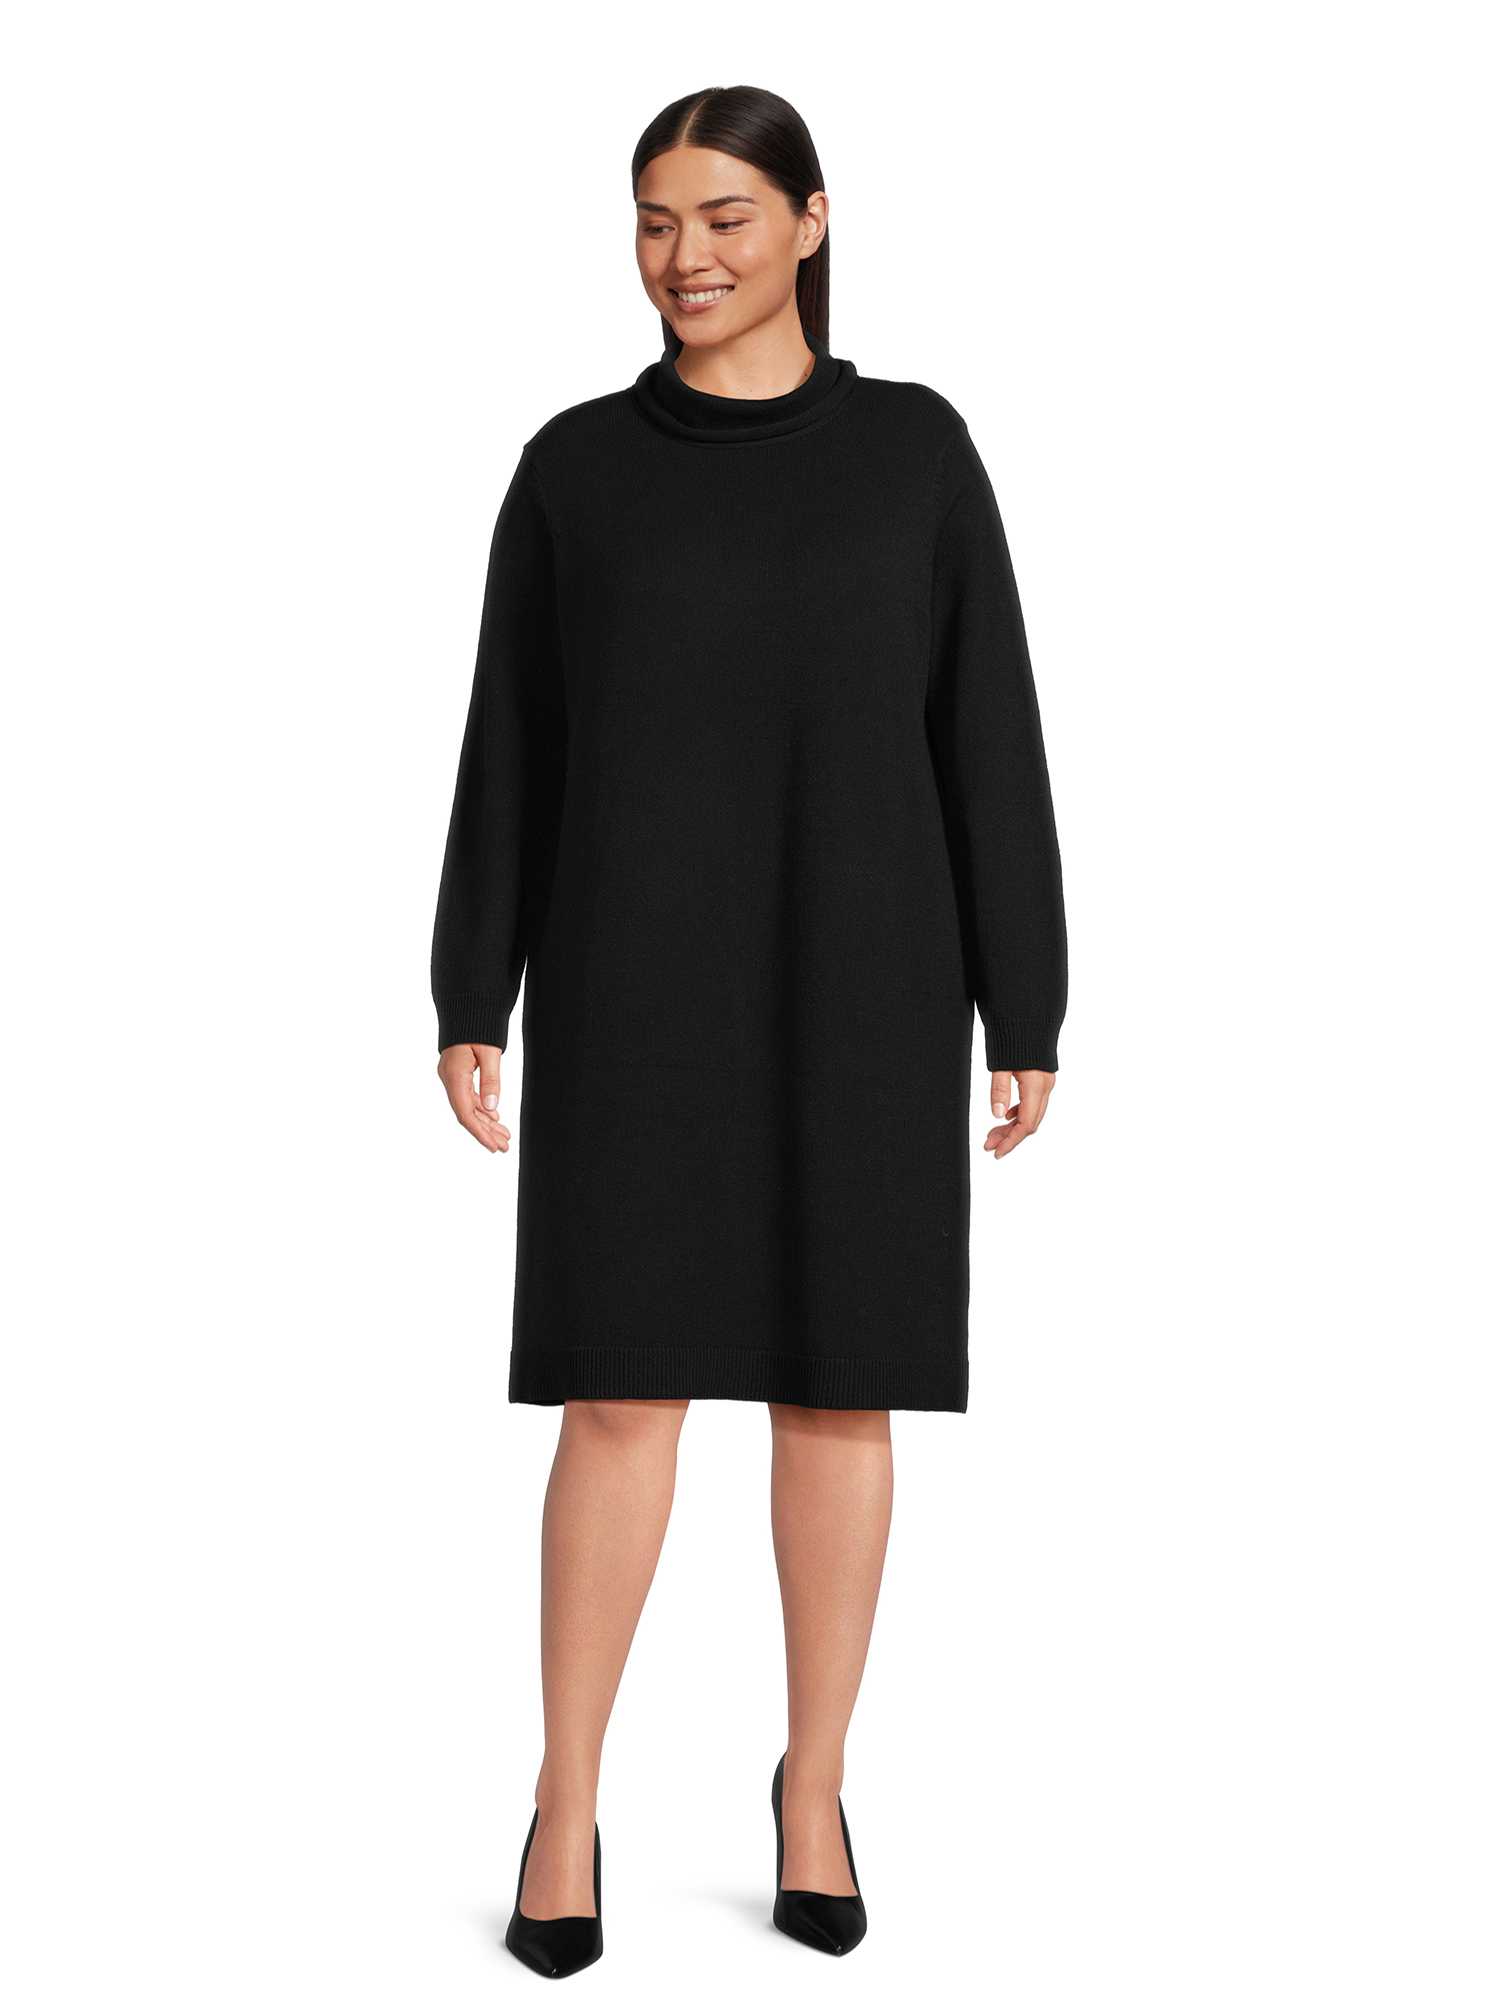 Terra & Sky Women's Plus Size Turtleneck Tunic Length Sweater Dress - image 2 of 5